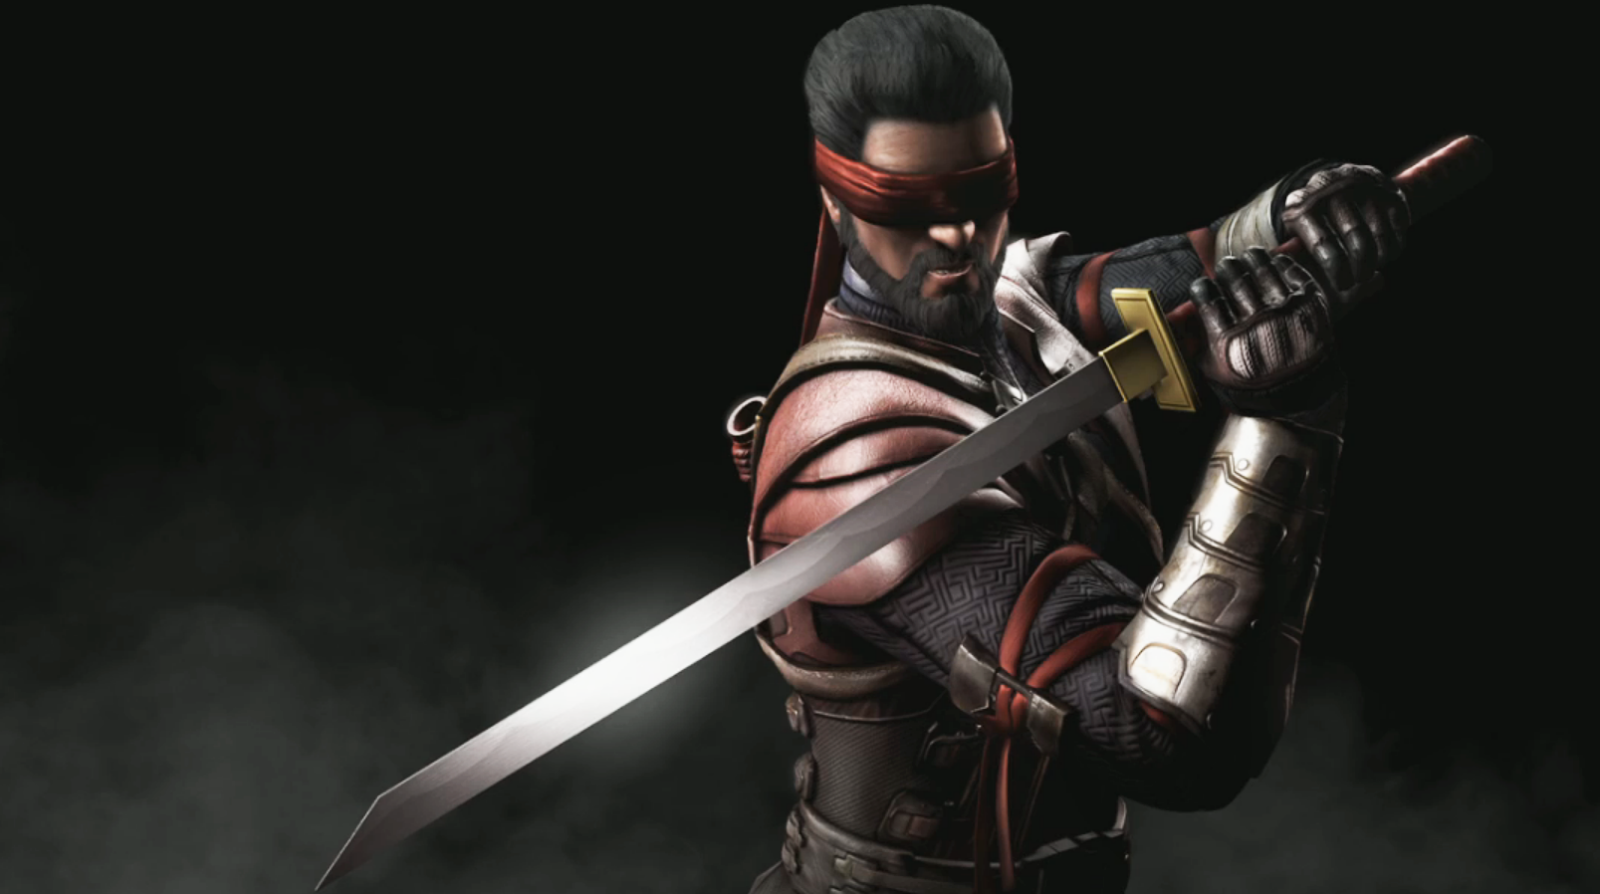 Mortal Kombat Notícias: KENSHI - A HISTÓRIA